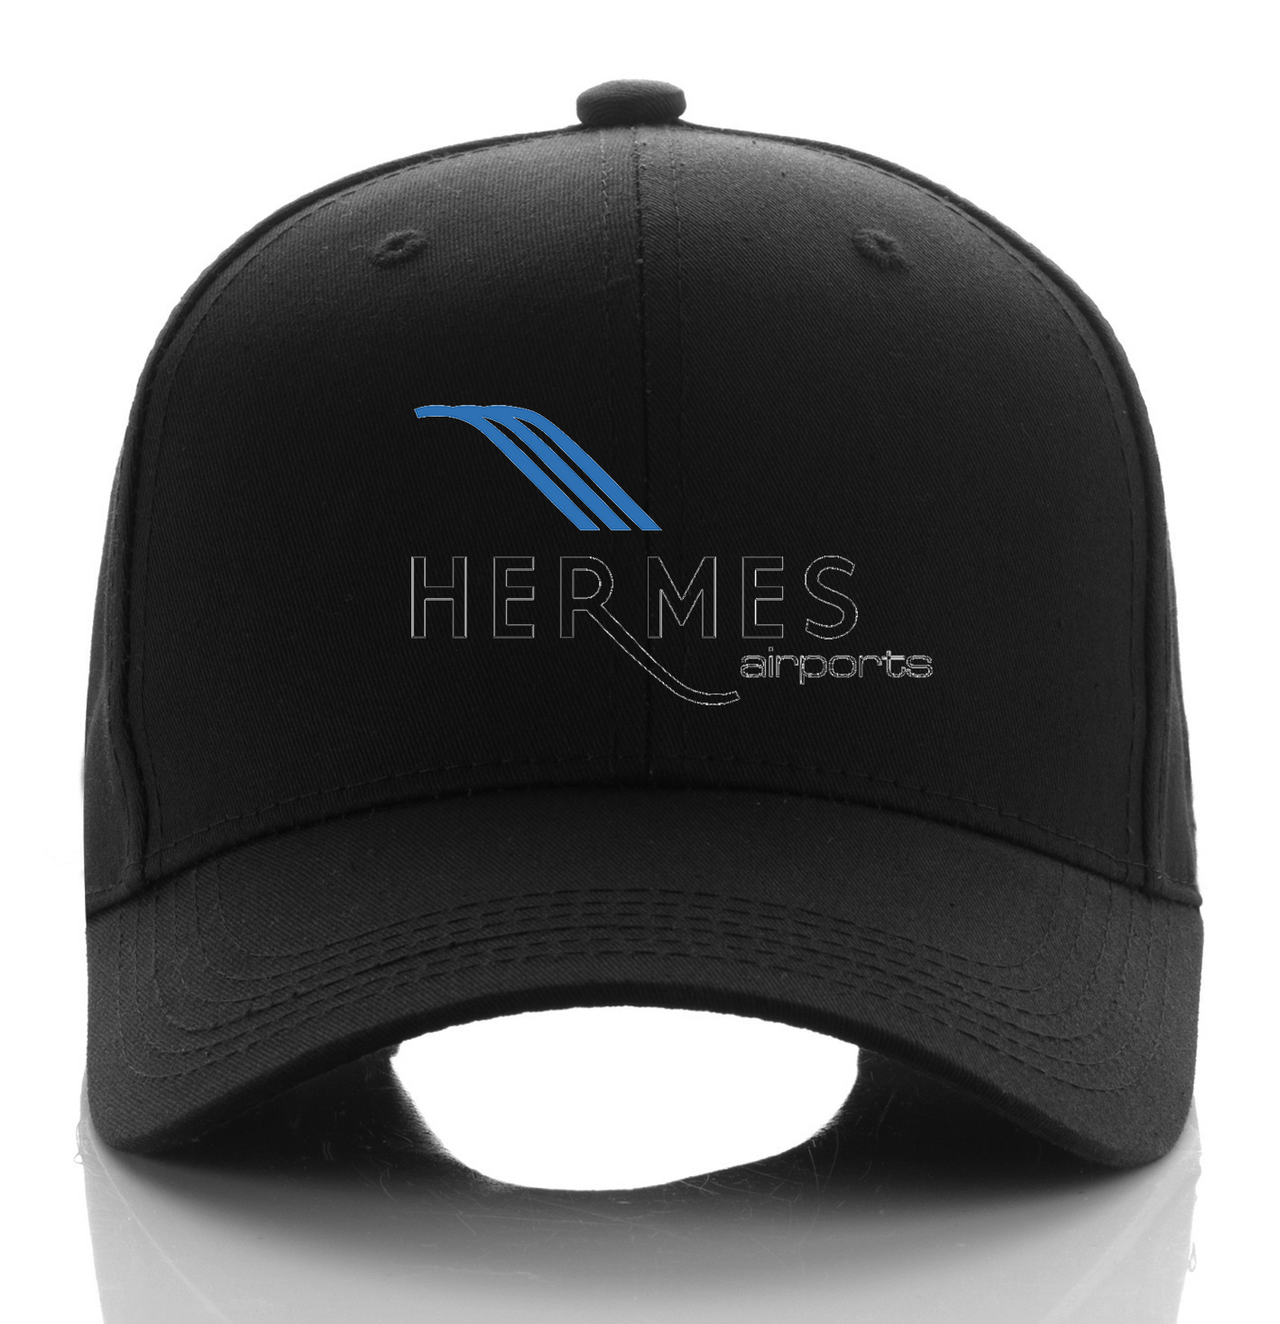 HERMES AIRLINE DESIGNED CAP